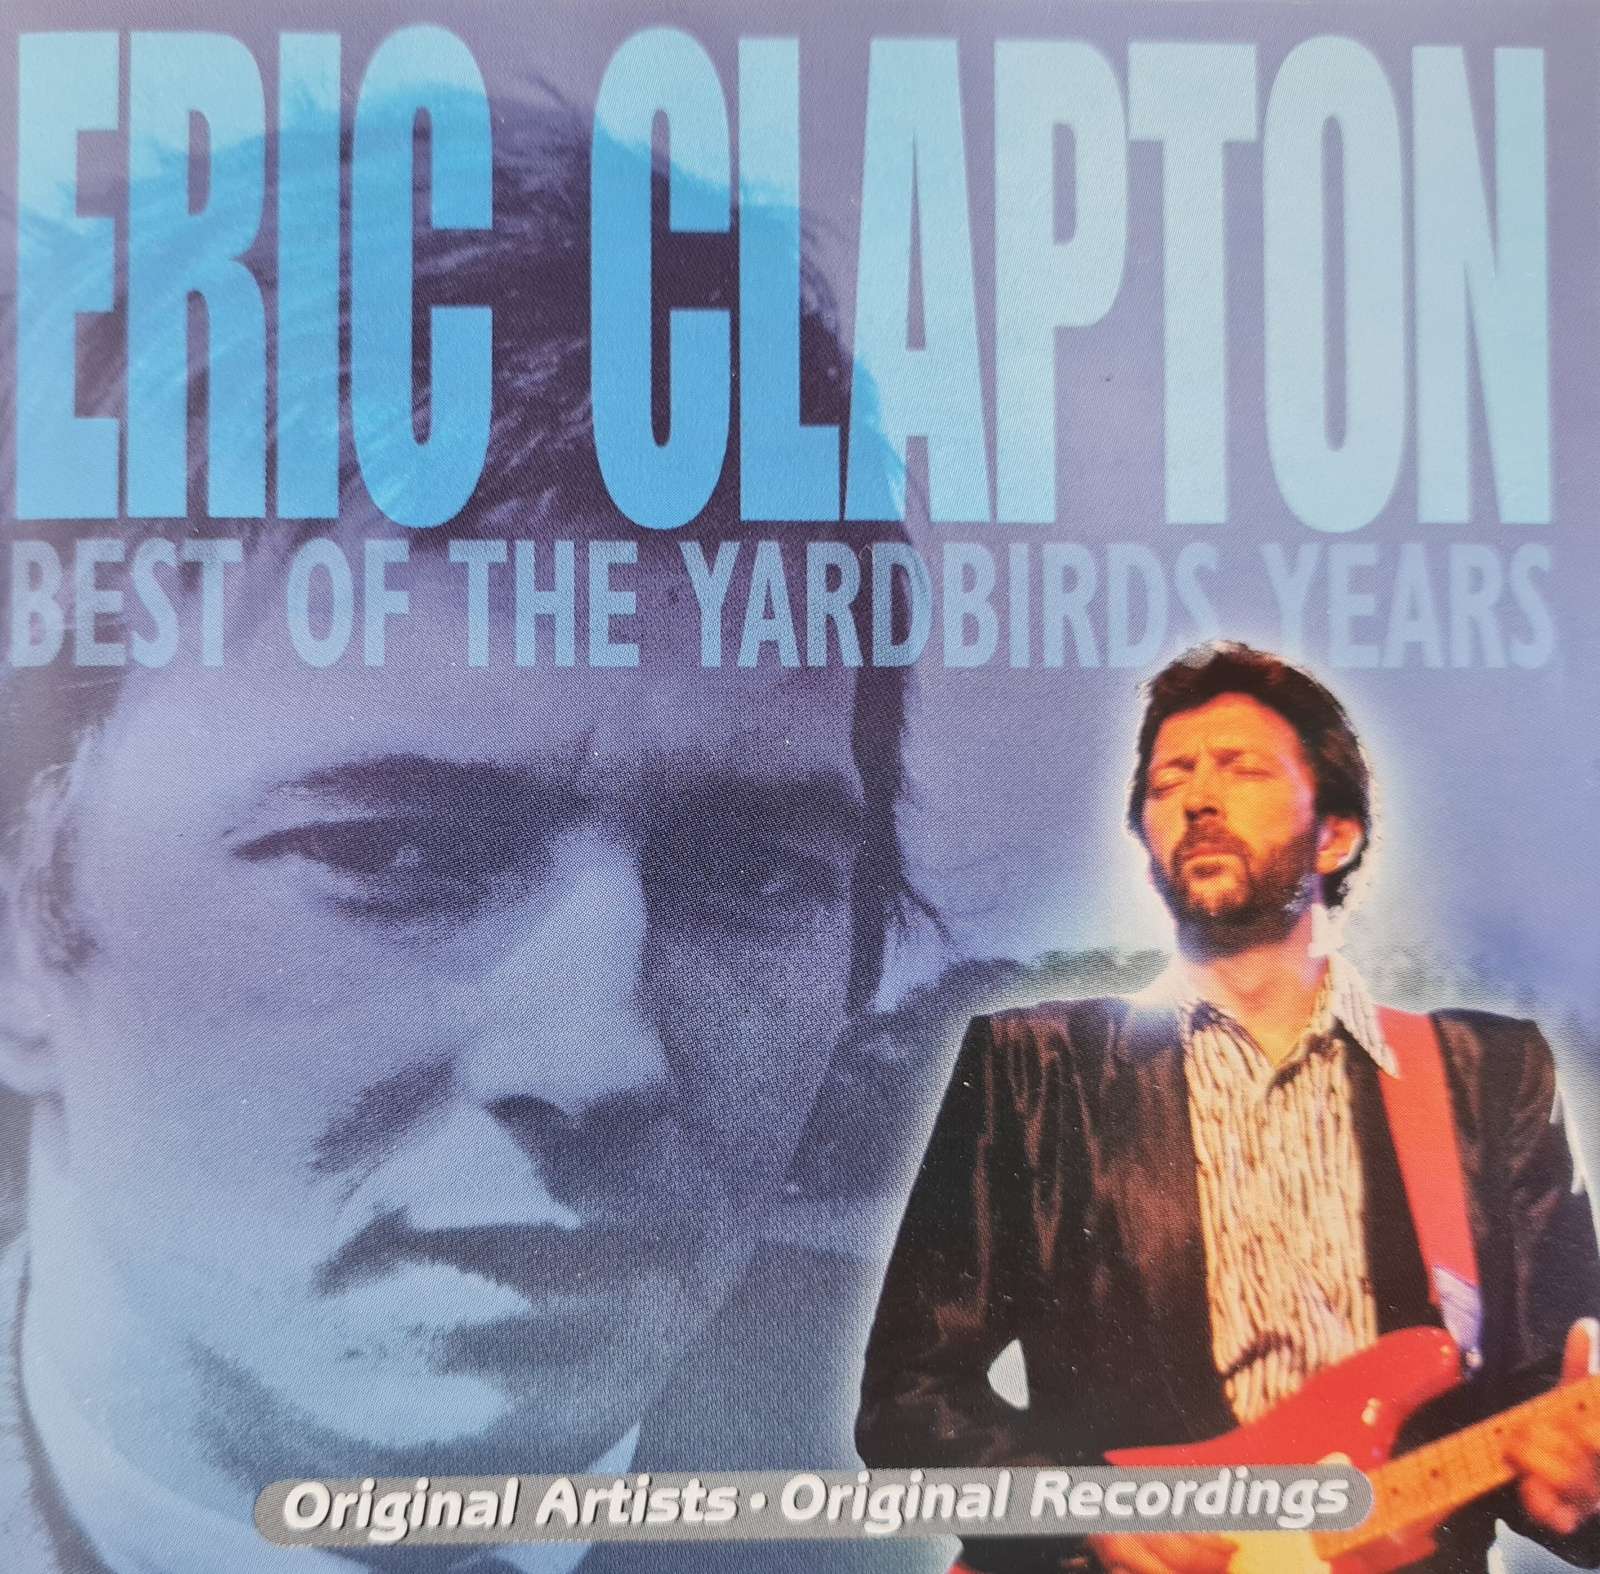 Eric Clapton - Best of The Yardbirds Years CD